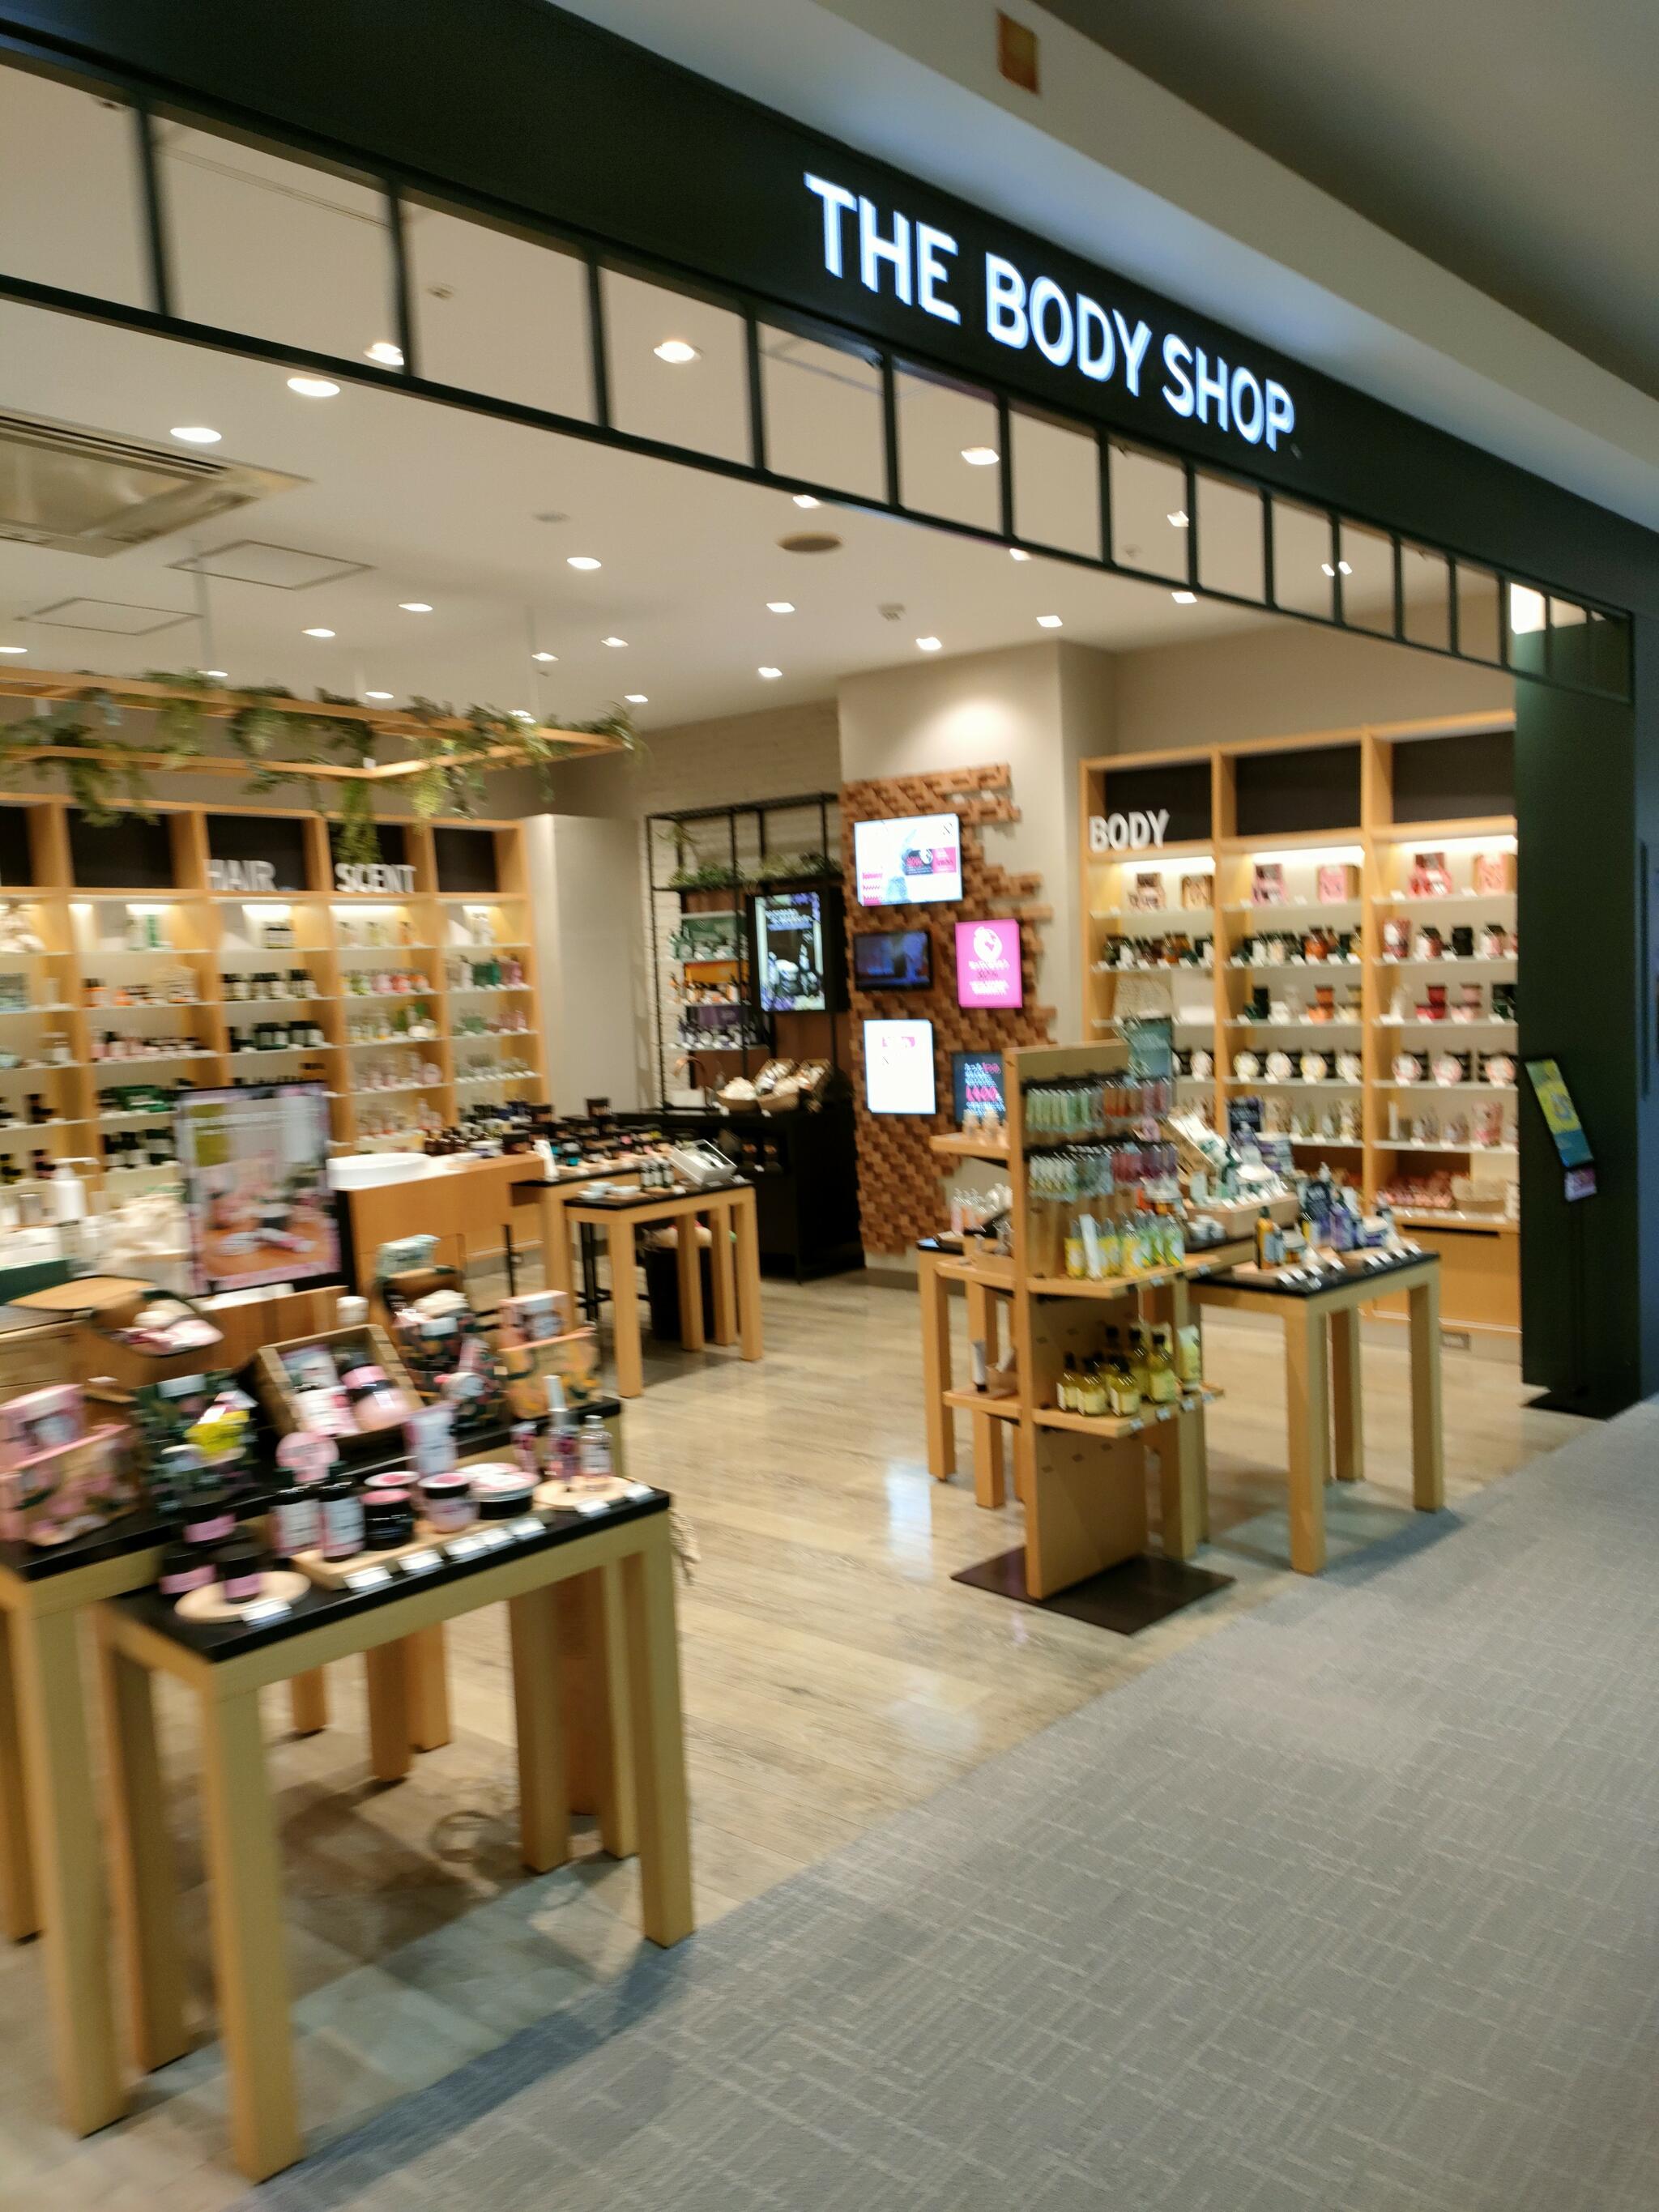 THE BODY SHOP イオンモール岡崎店 - 岡崎市戸崎町/化粧品店 | Yahoo 